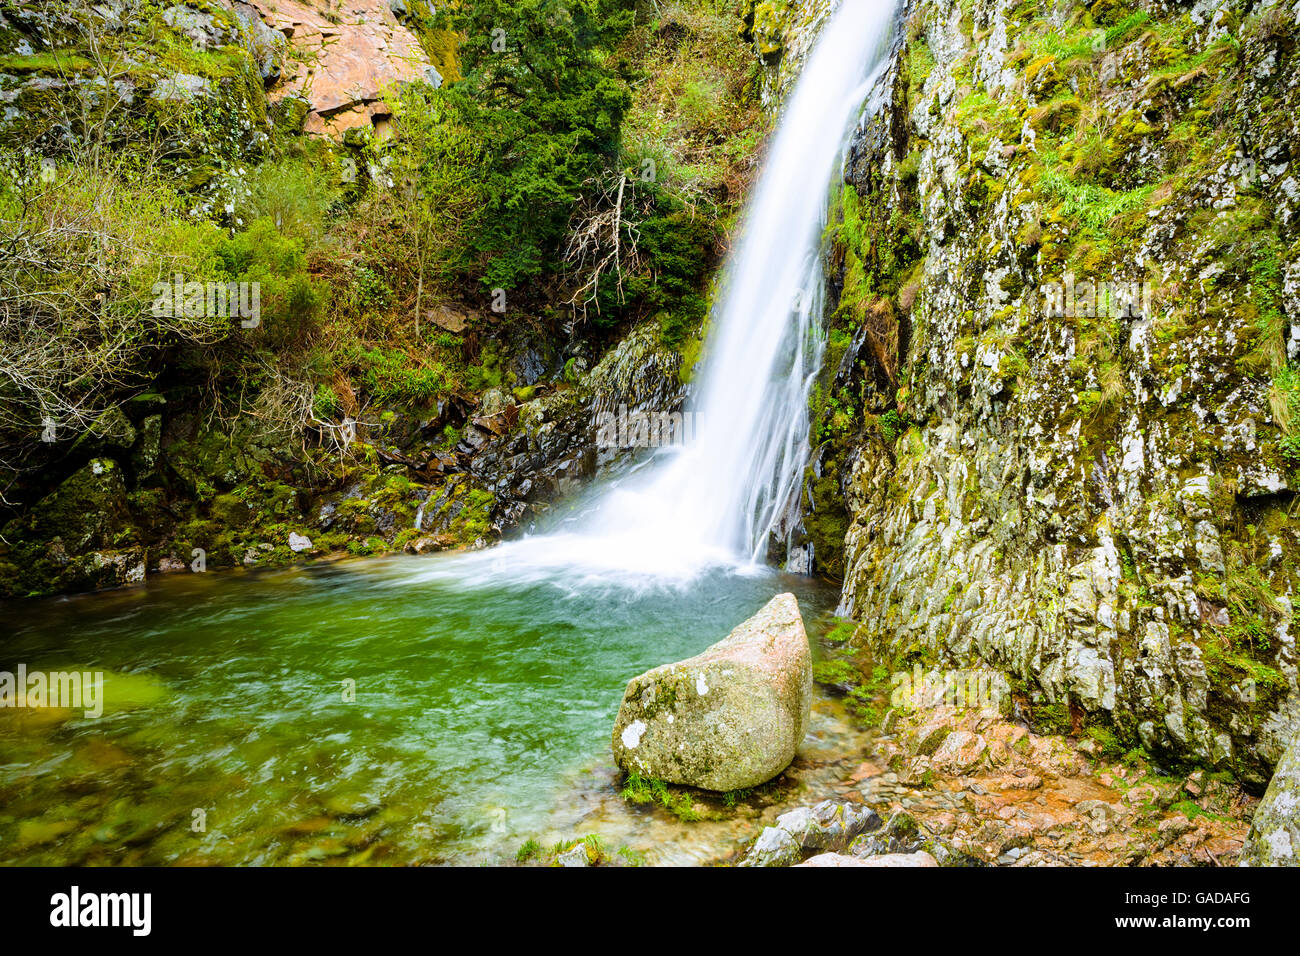 The Poço do Inferno waterfall set in boreal forest in the Serra da Estrela mountains, Portugal, Europe Stock Photo